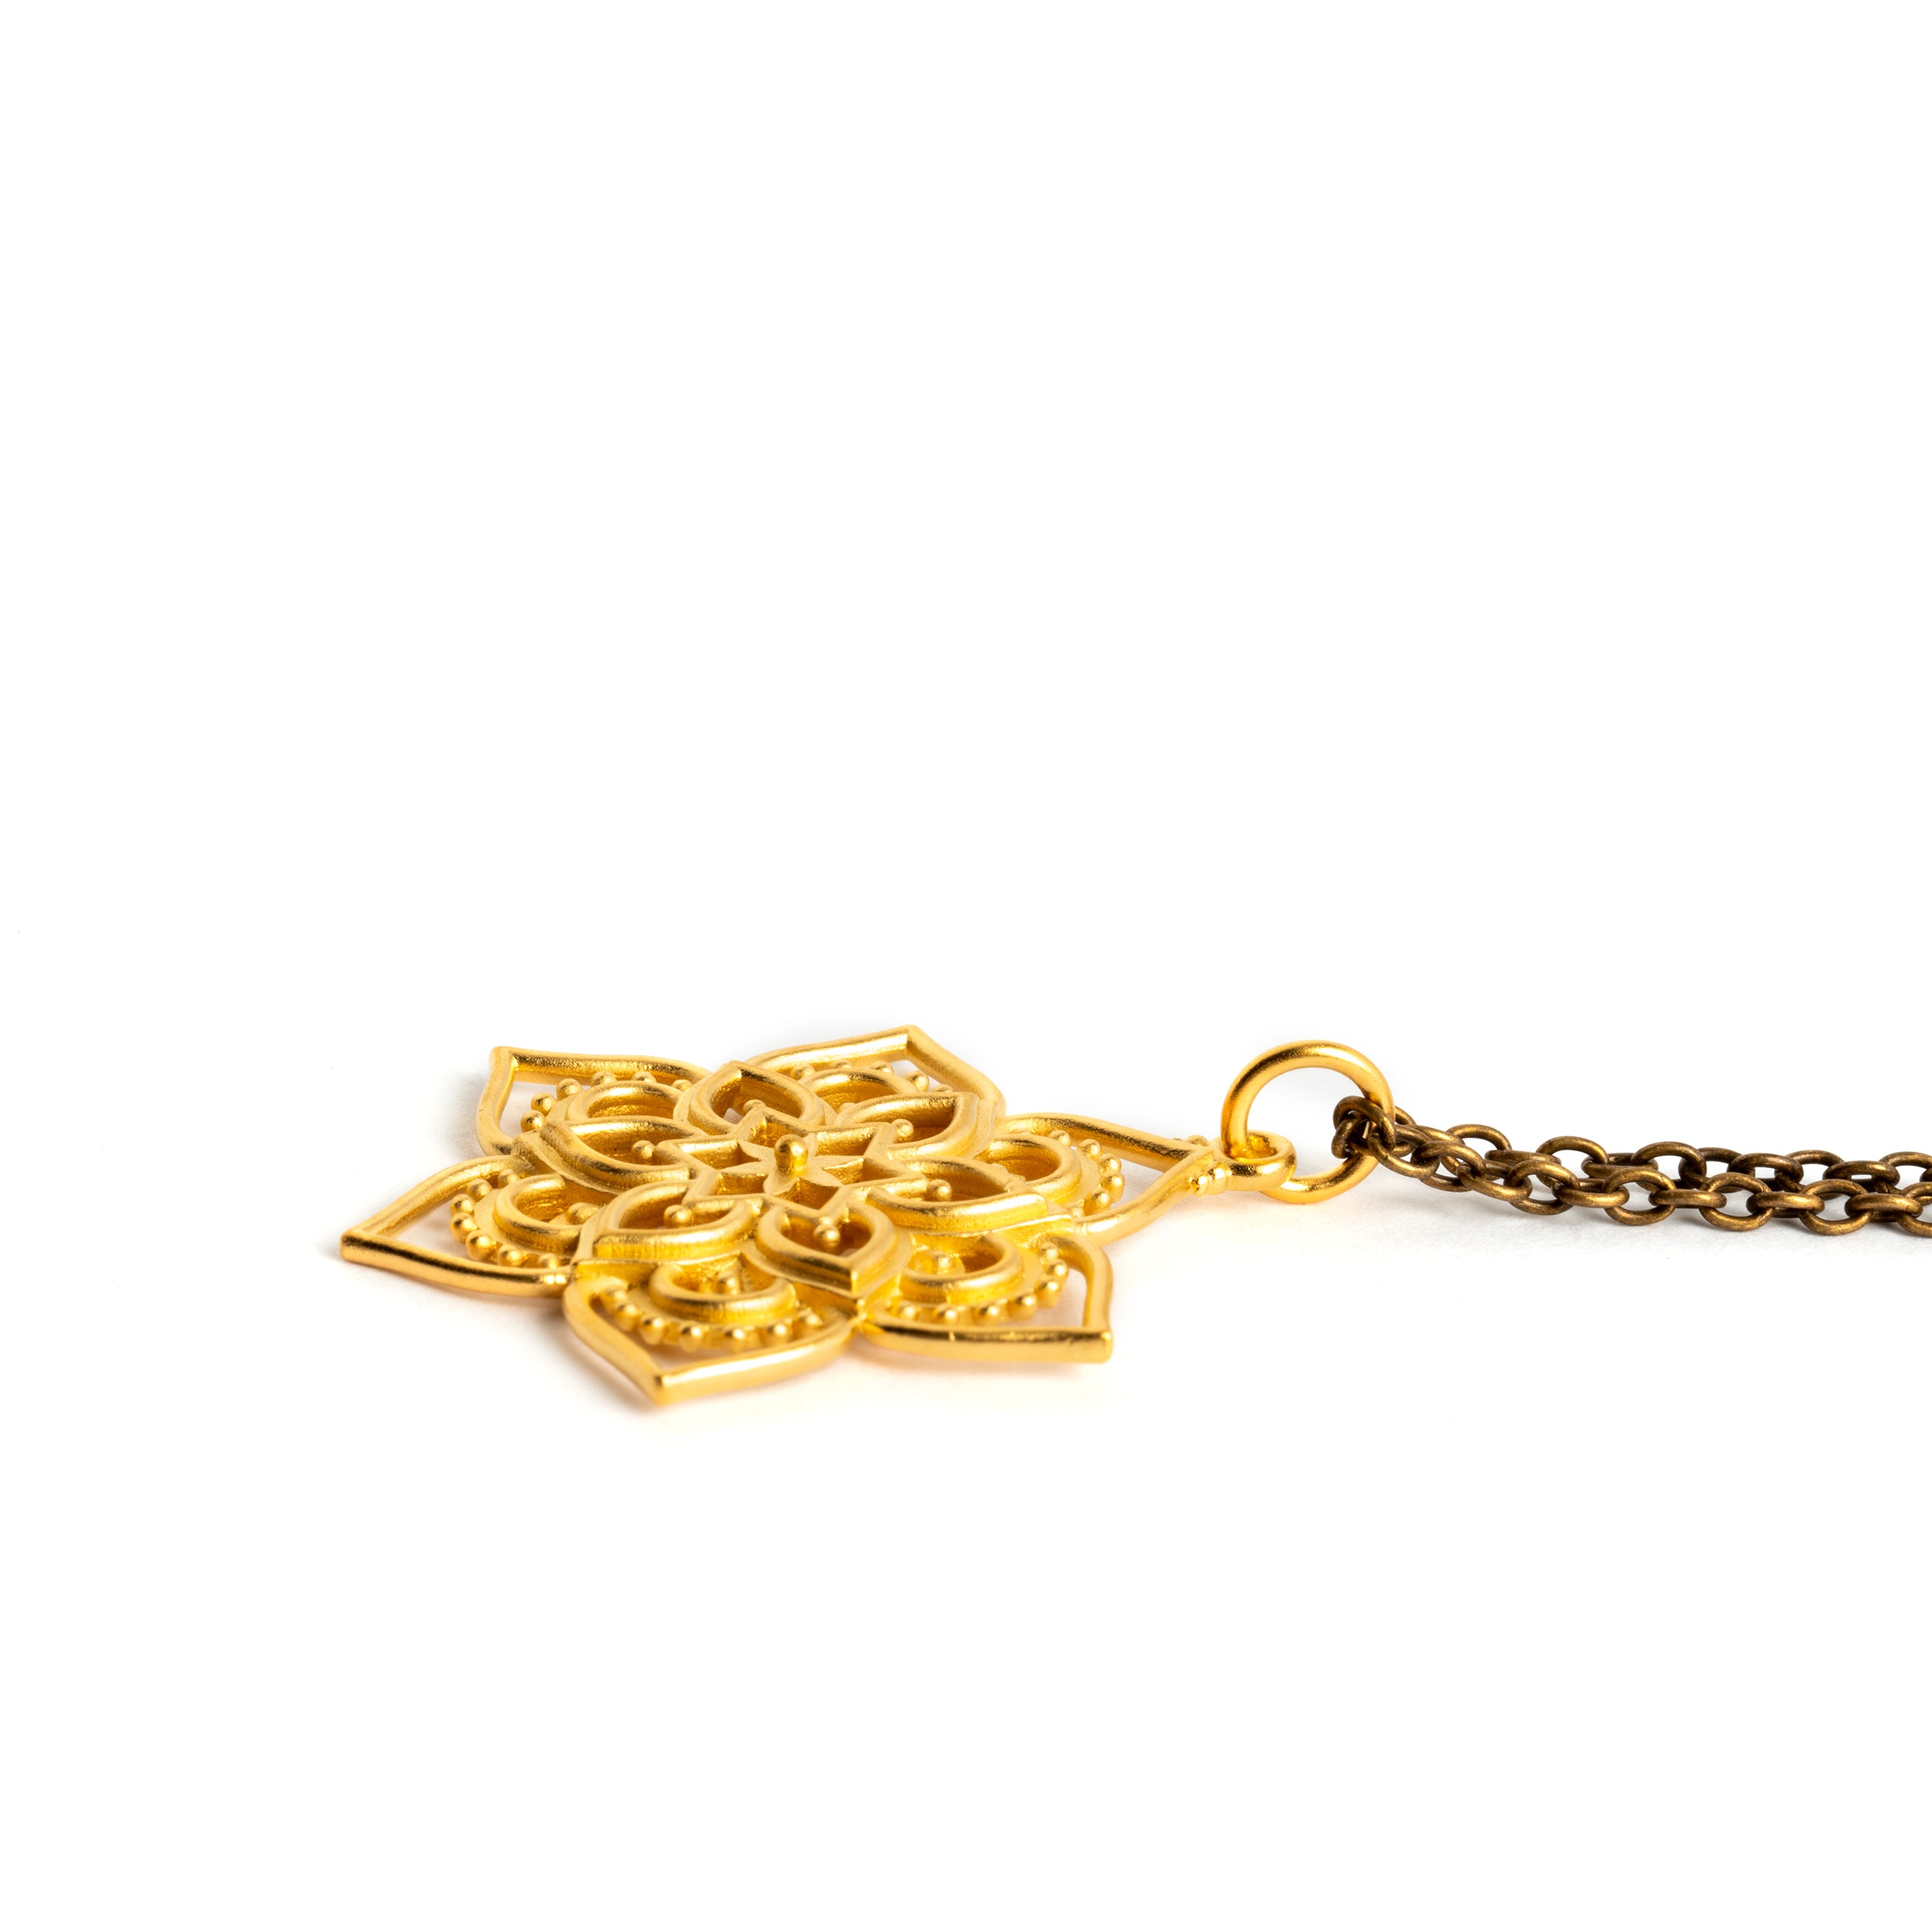 Gold Open Lotus Mandala Necklace